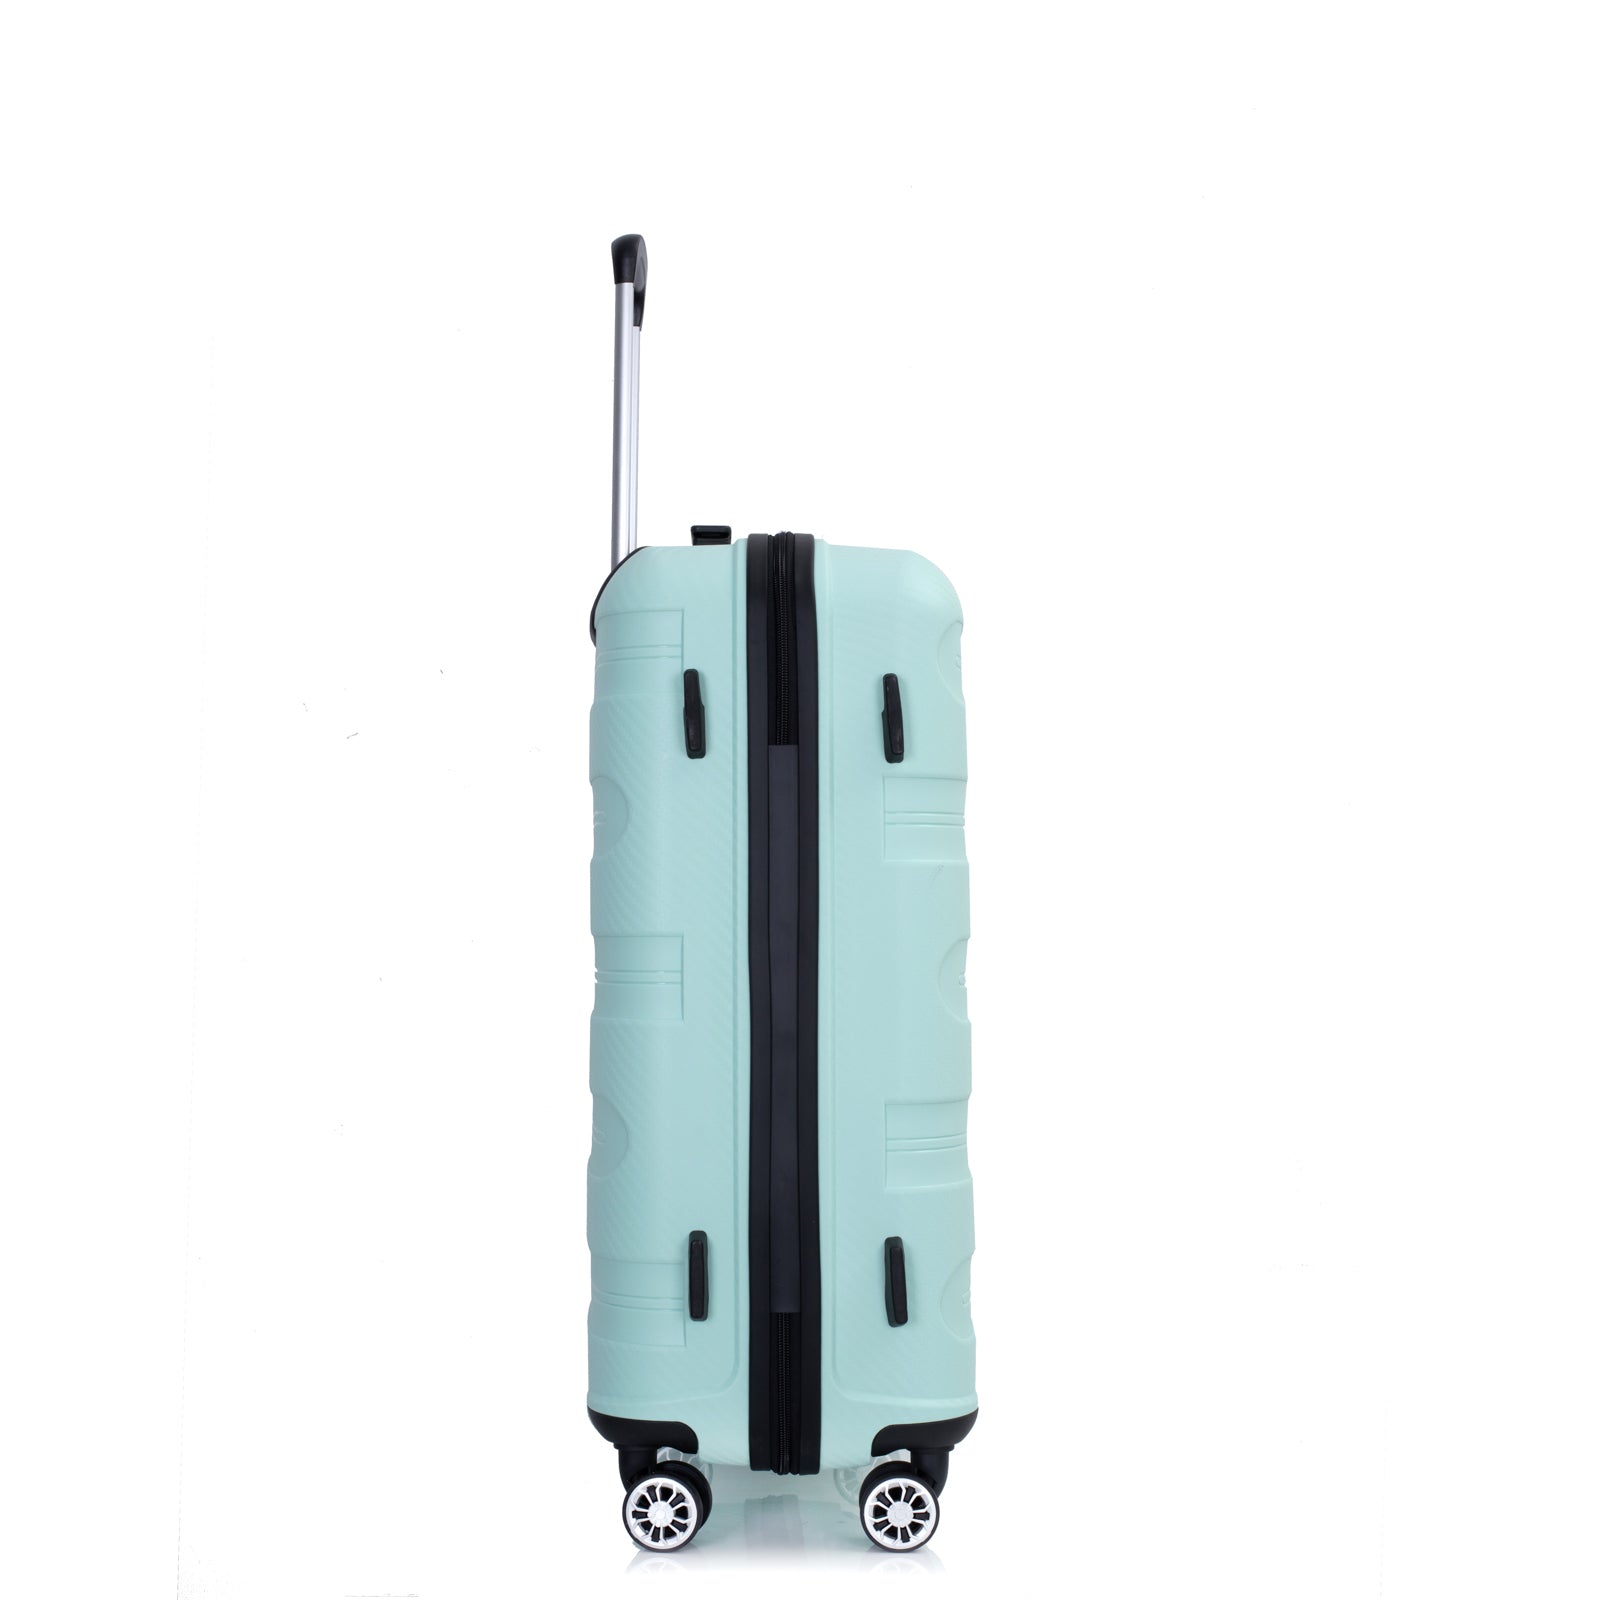 Hardshell Suitcase Spinner Wheels PP Luggage Sets light green-polypropylene